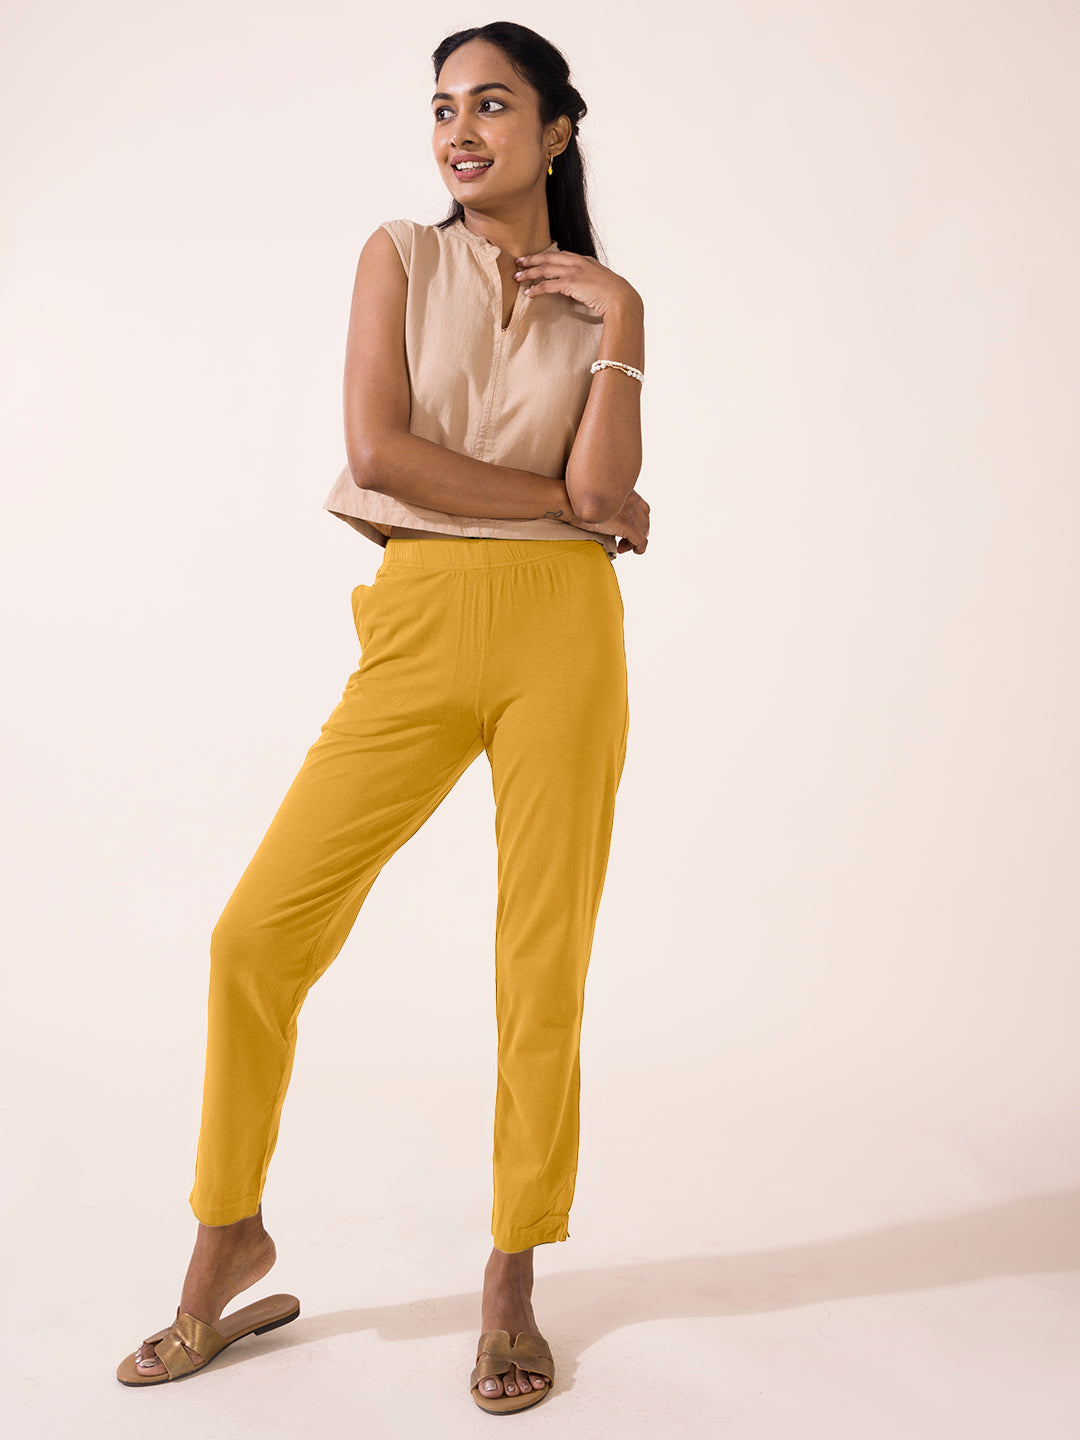 Shop Yellow Pants for Women | Soch